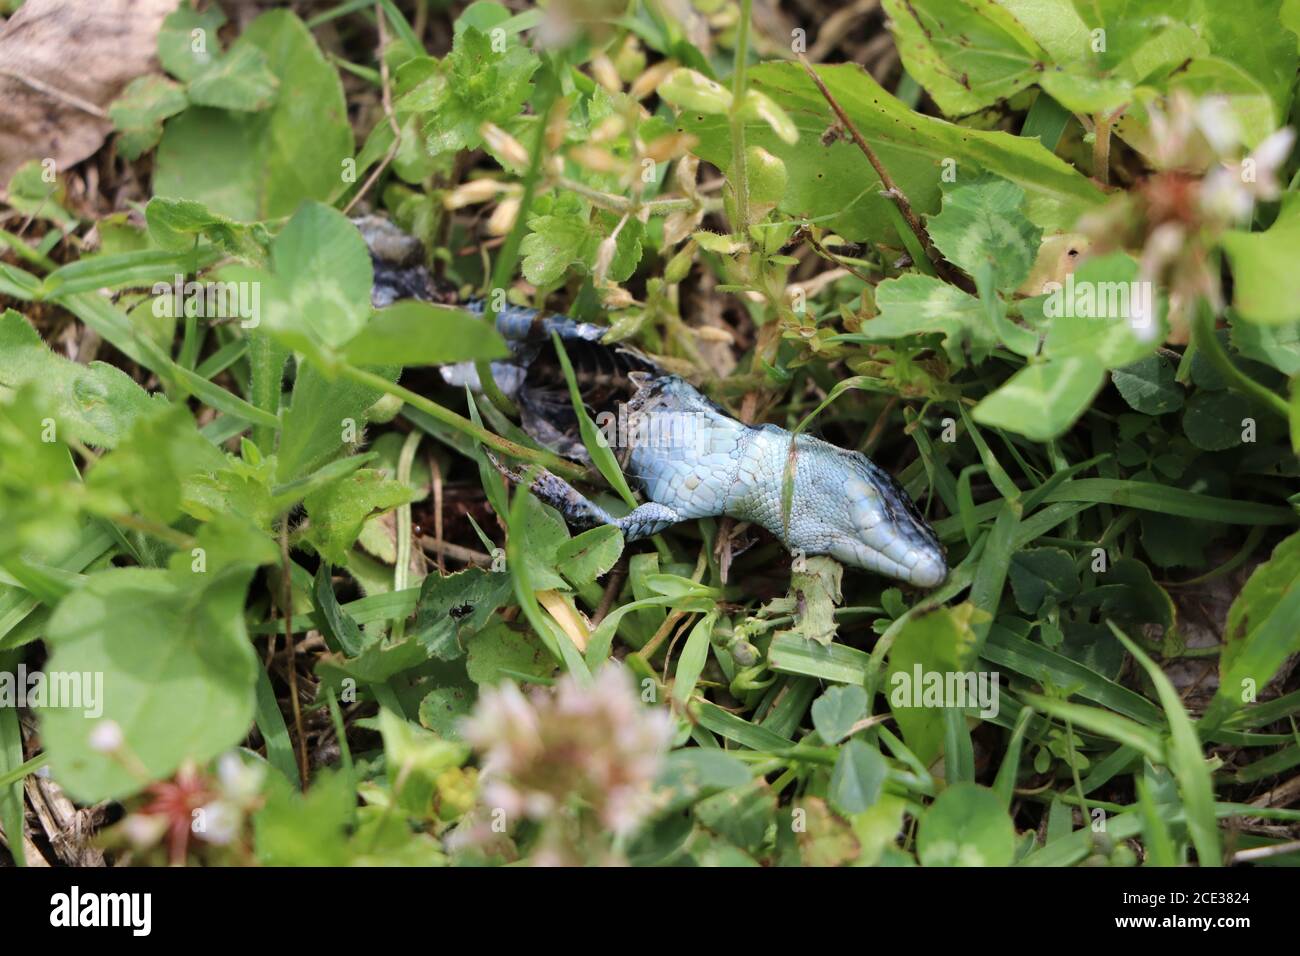 dead lizard body decomposing in the grass Stock Photo